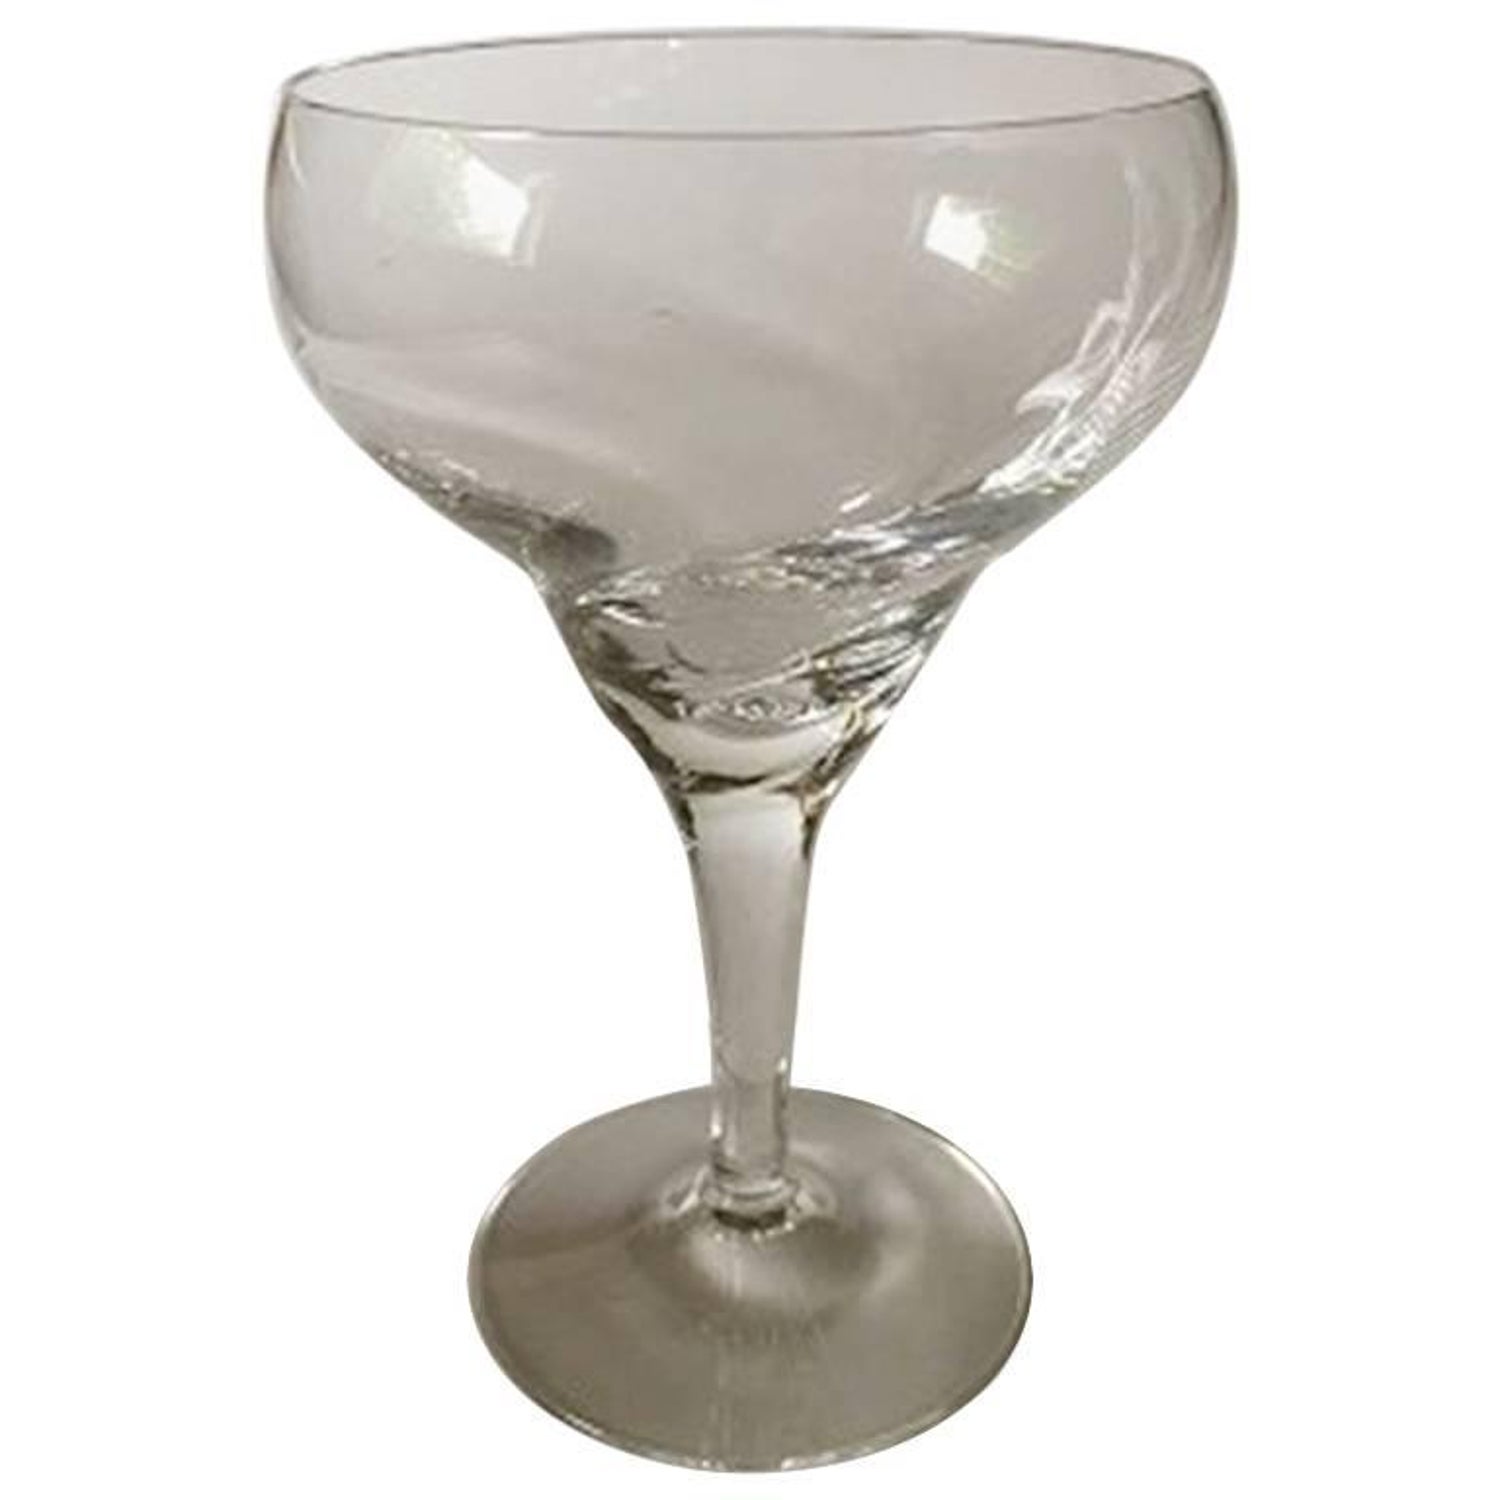 Xanadu Arje Griegst Sherbet Glass from Holmegaard For Sale at 1stDibs